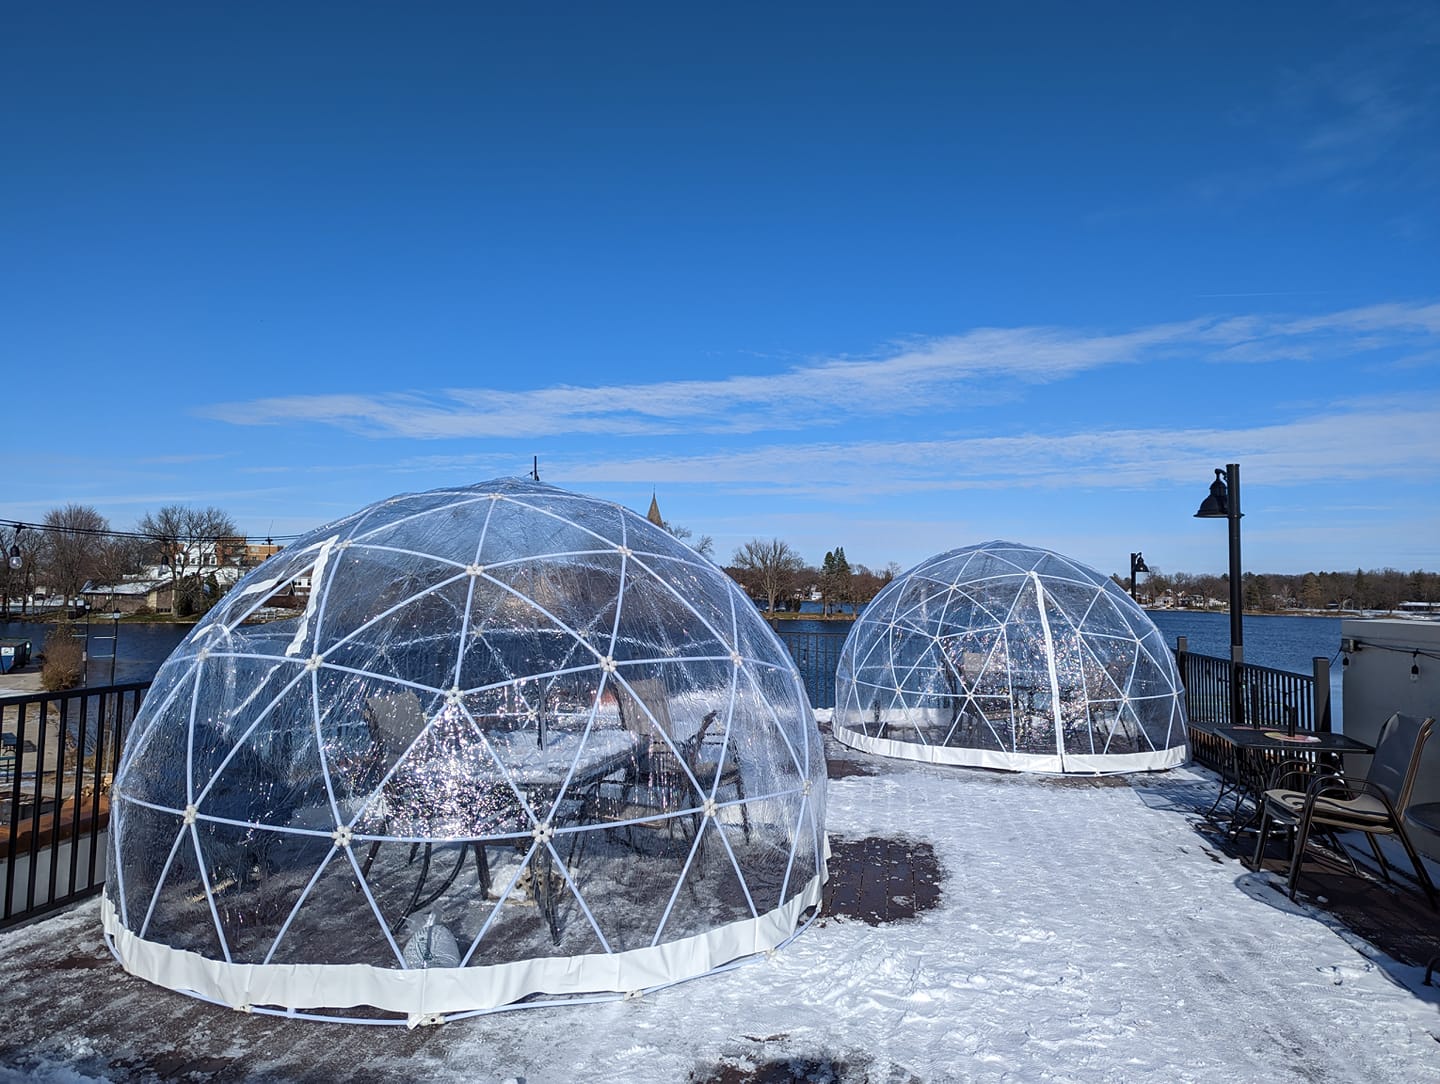 The Etc Oconomowoc snow domes